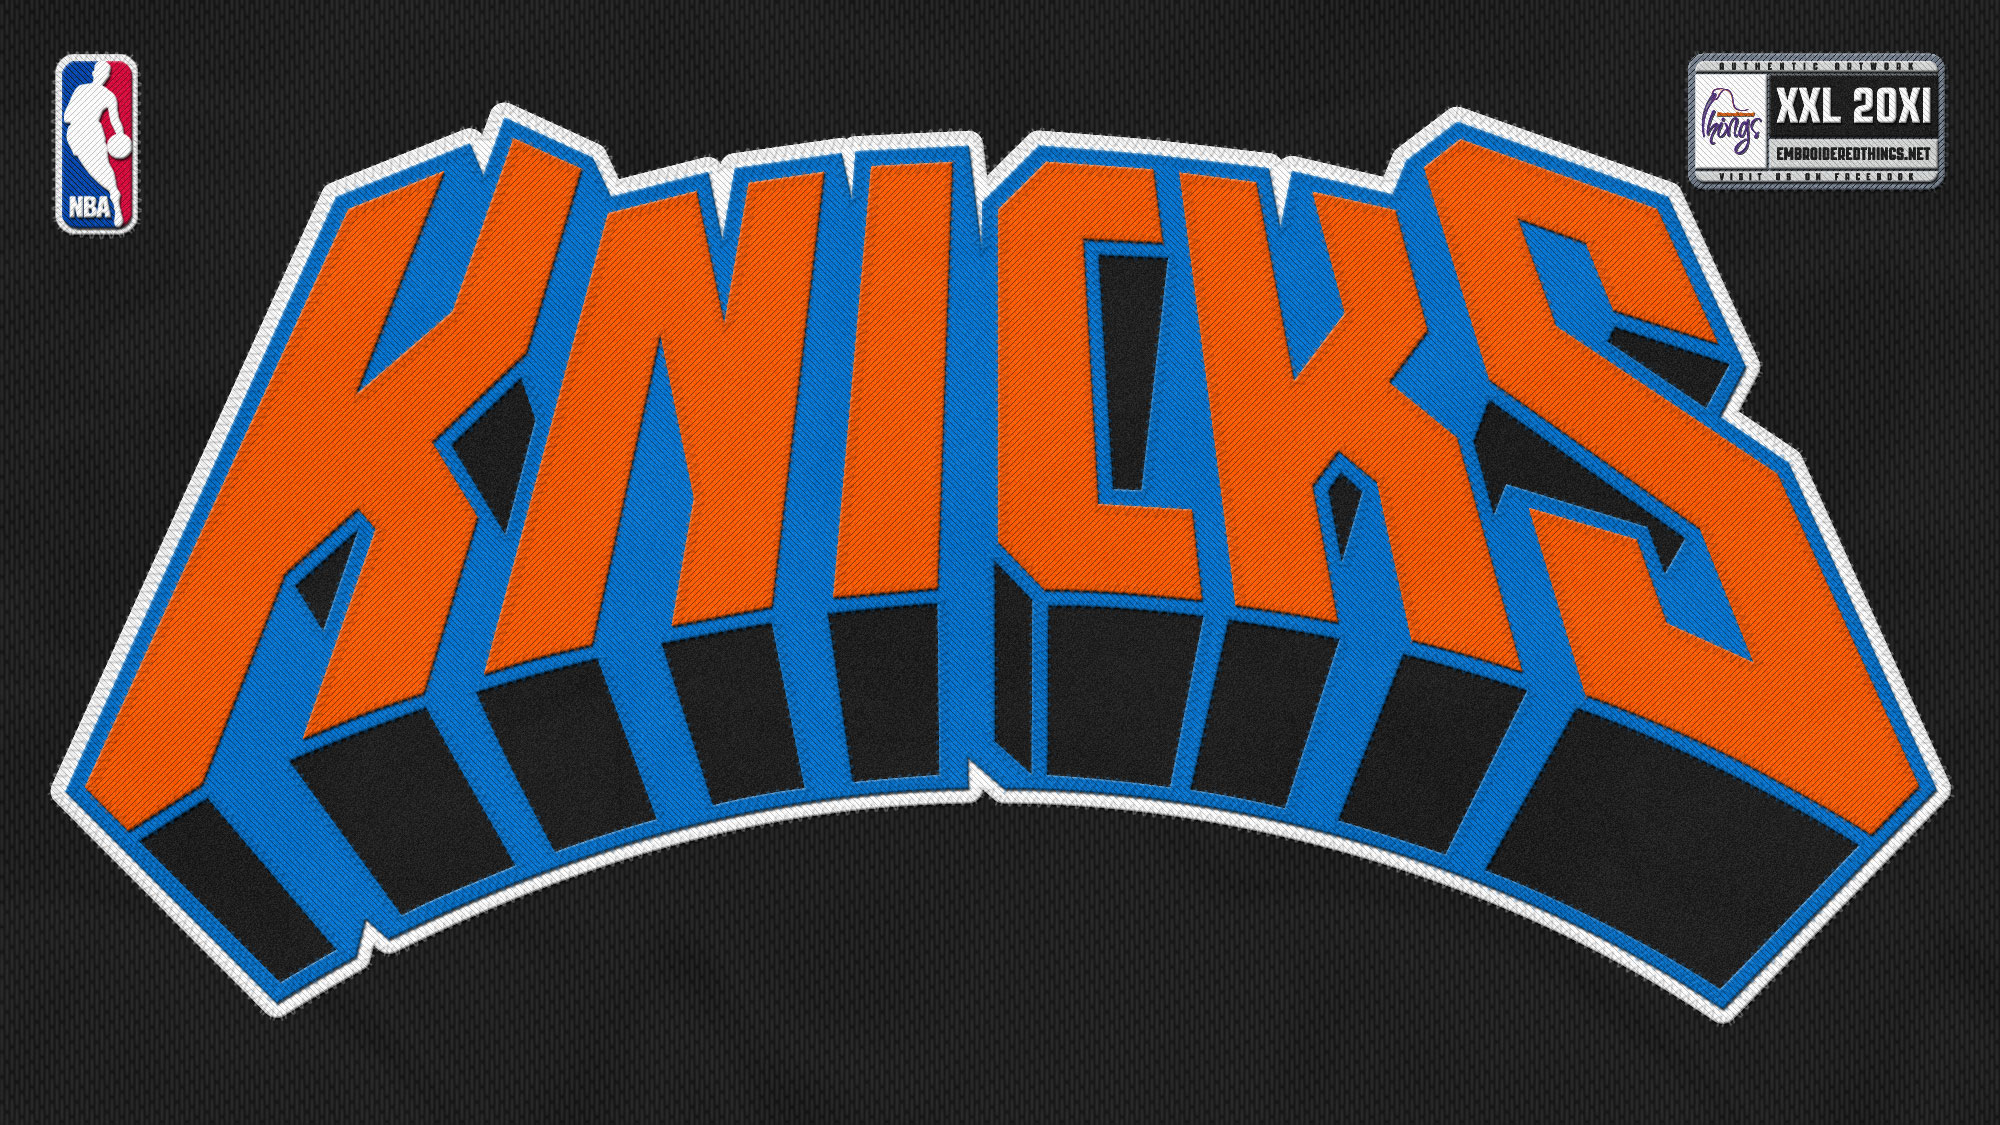 Nba New York Knicks Logo Wallpaper In Basketball